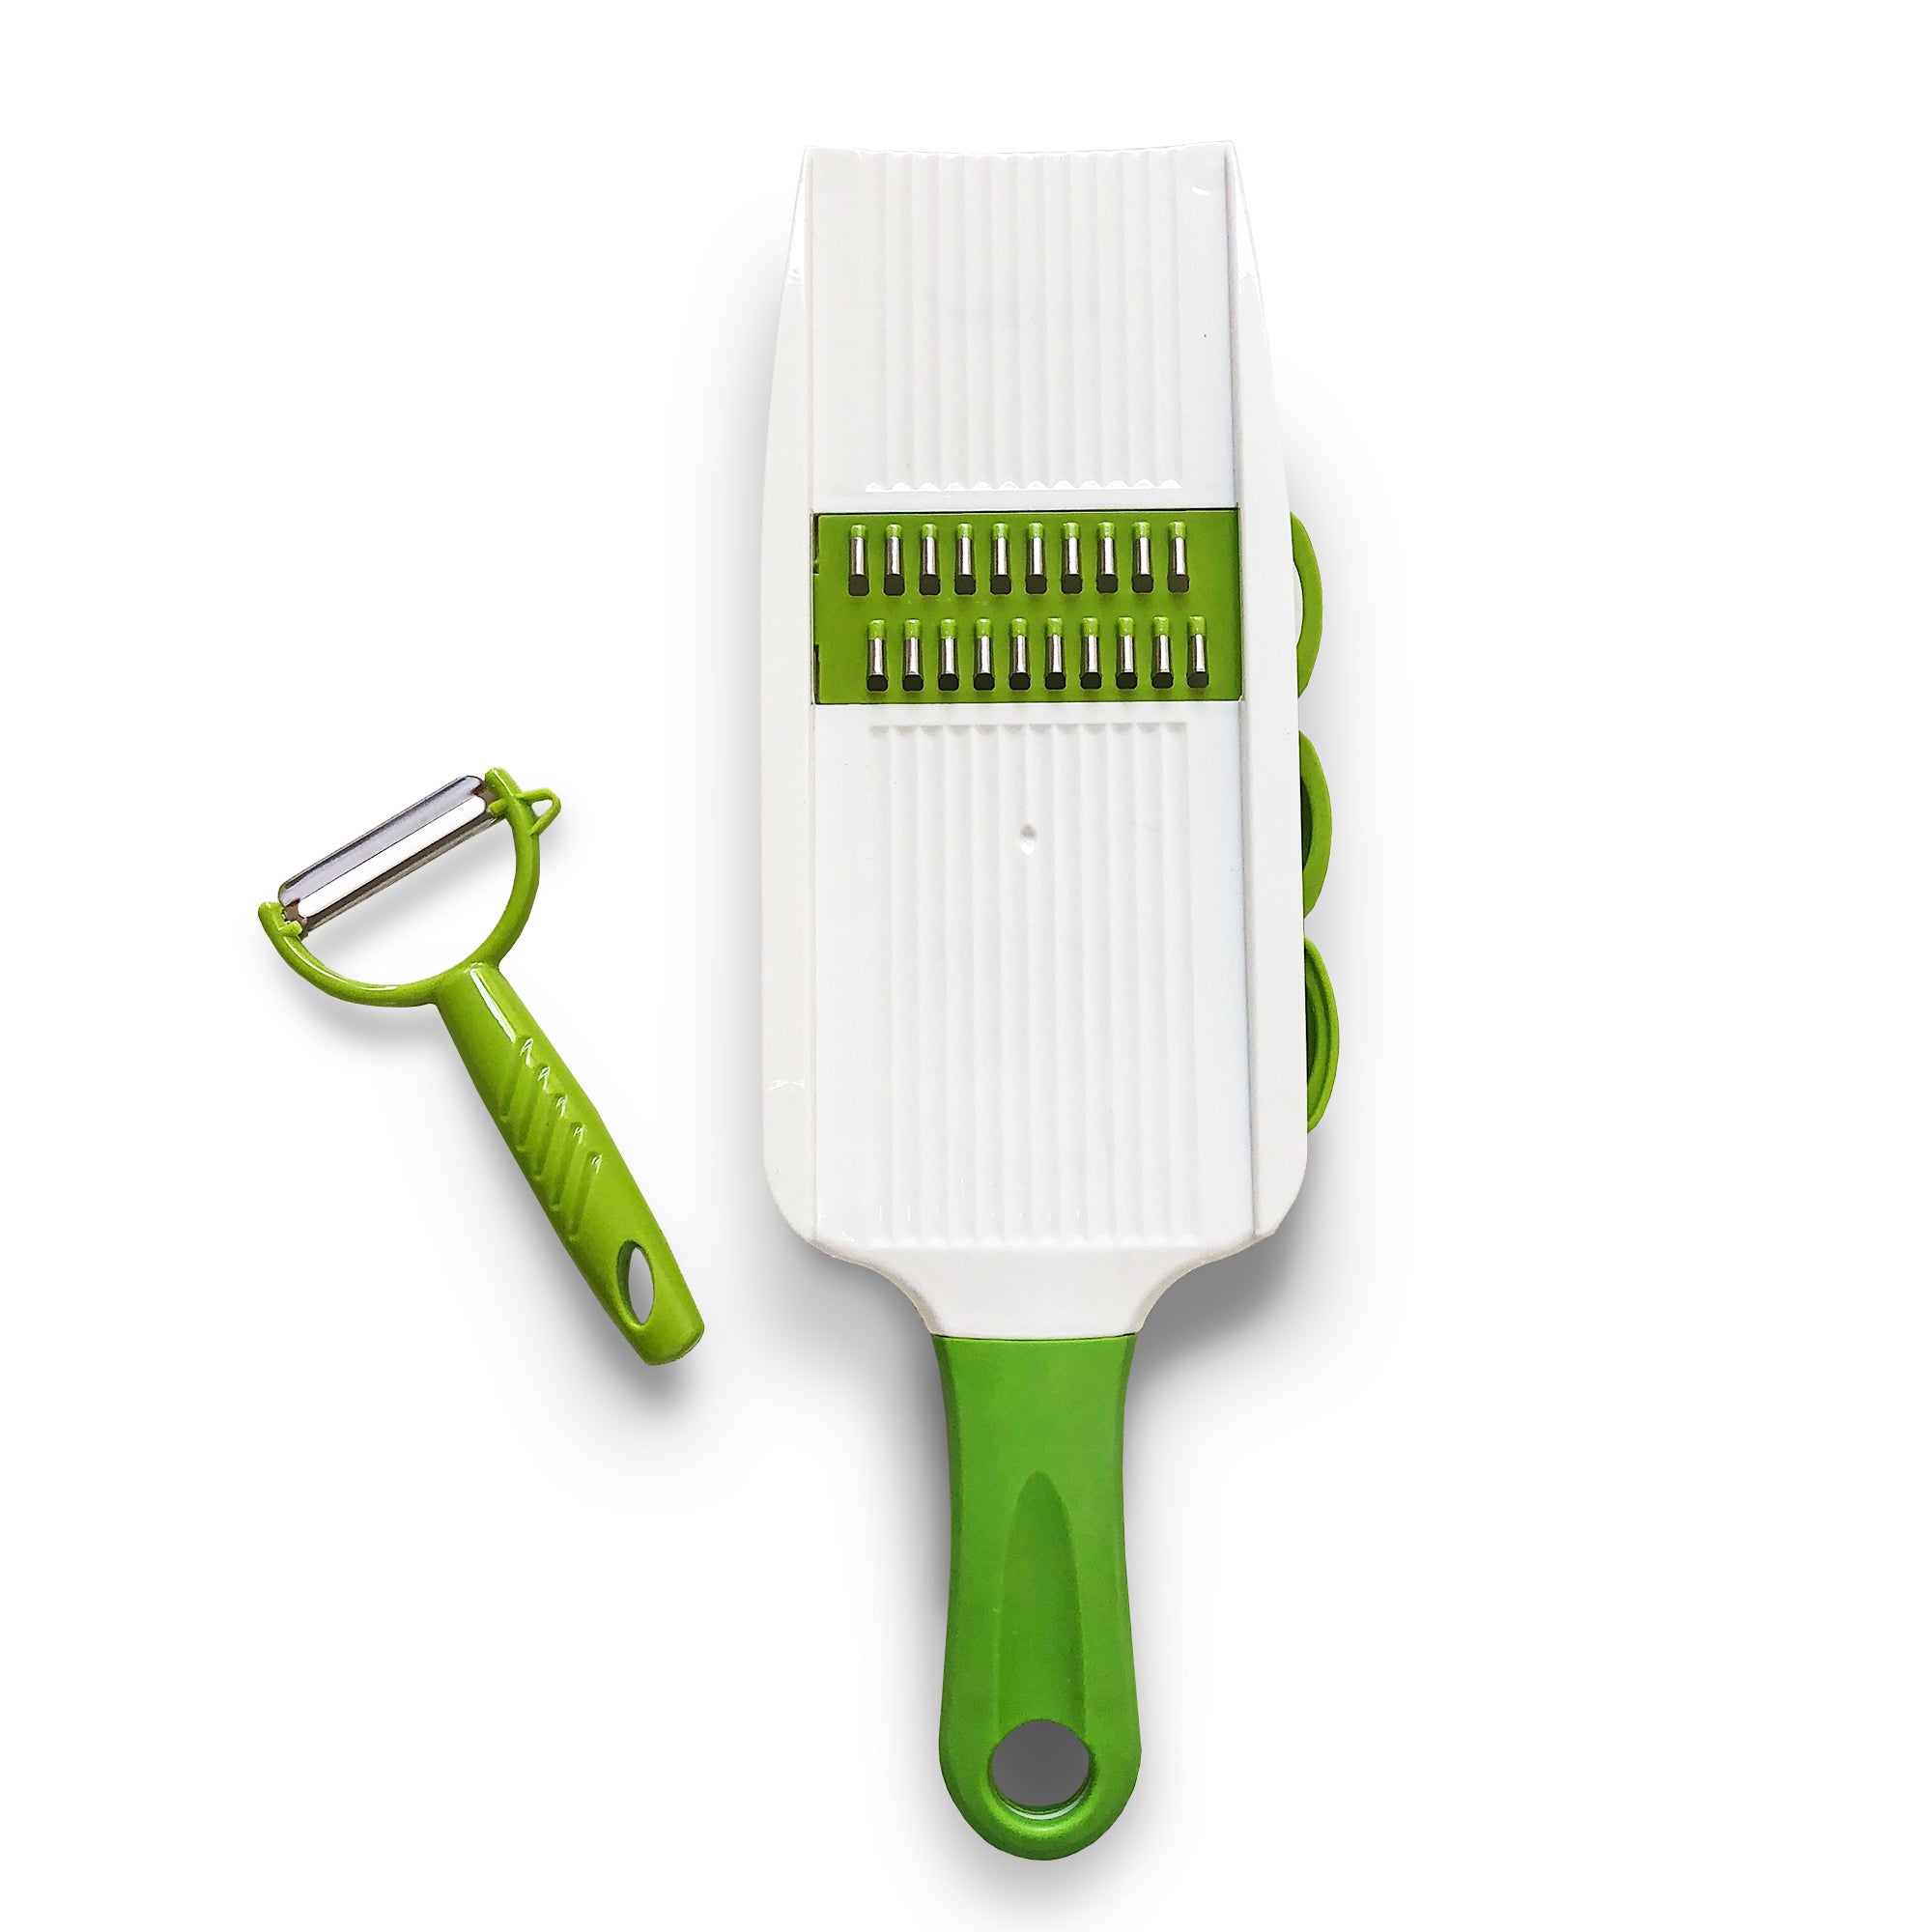 Visland Handheld Vegetable Slicer Cutter,Stainless Steel Vegetable